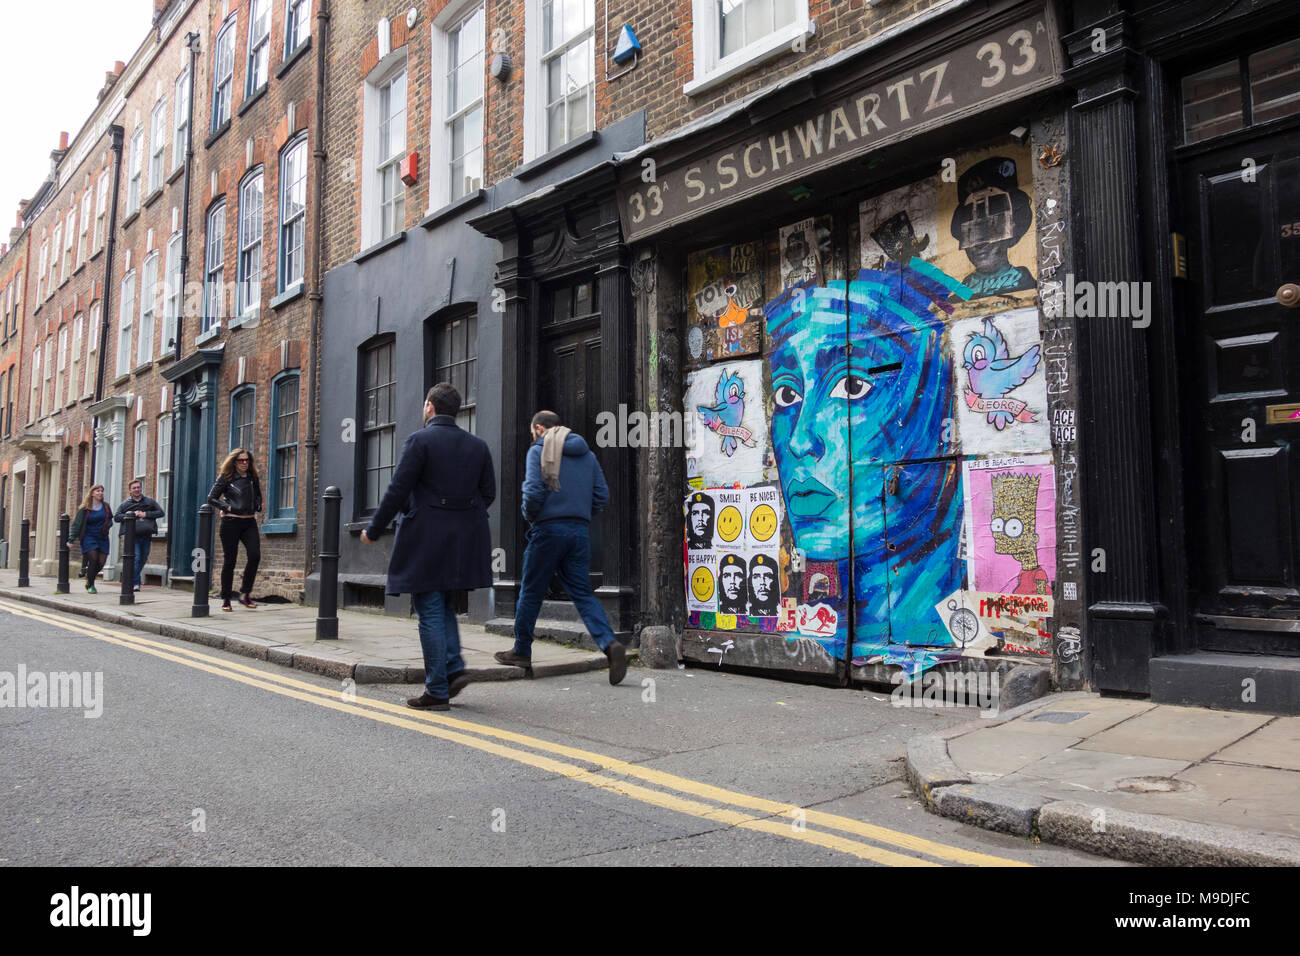 Street art on the gates to S. Schwartz at 33 Fournier Street, Spitalfields, London, E1, UK Stock Photo